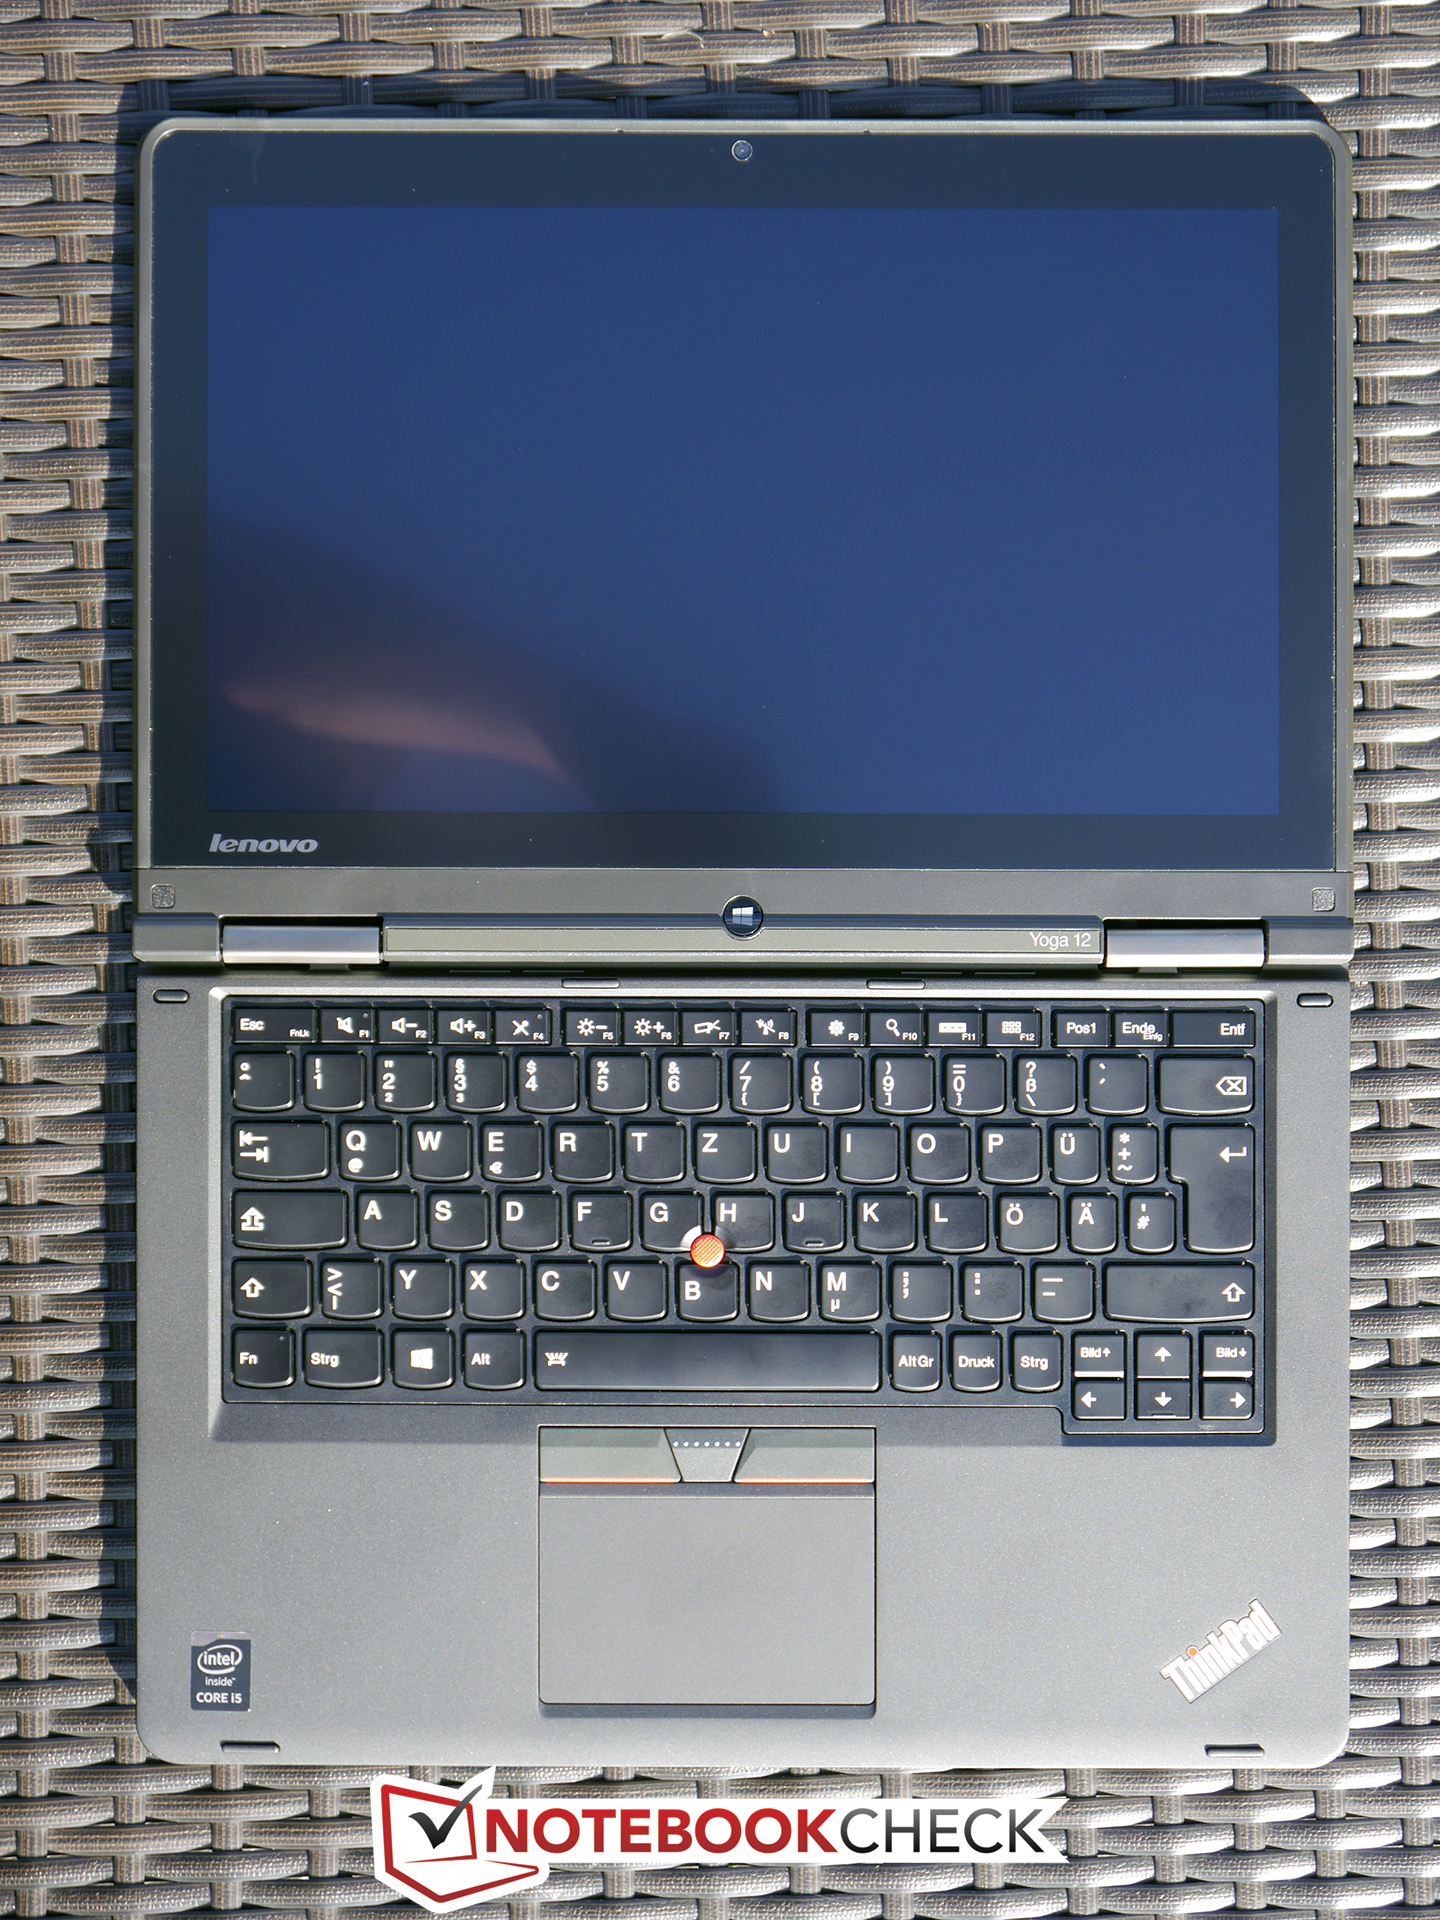 Lenovo ThinkPad Yoga 12 Convertible Review - NotebookCheck.net Reviews